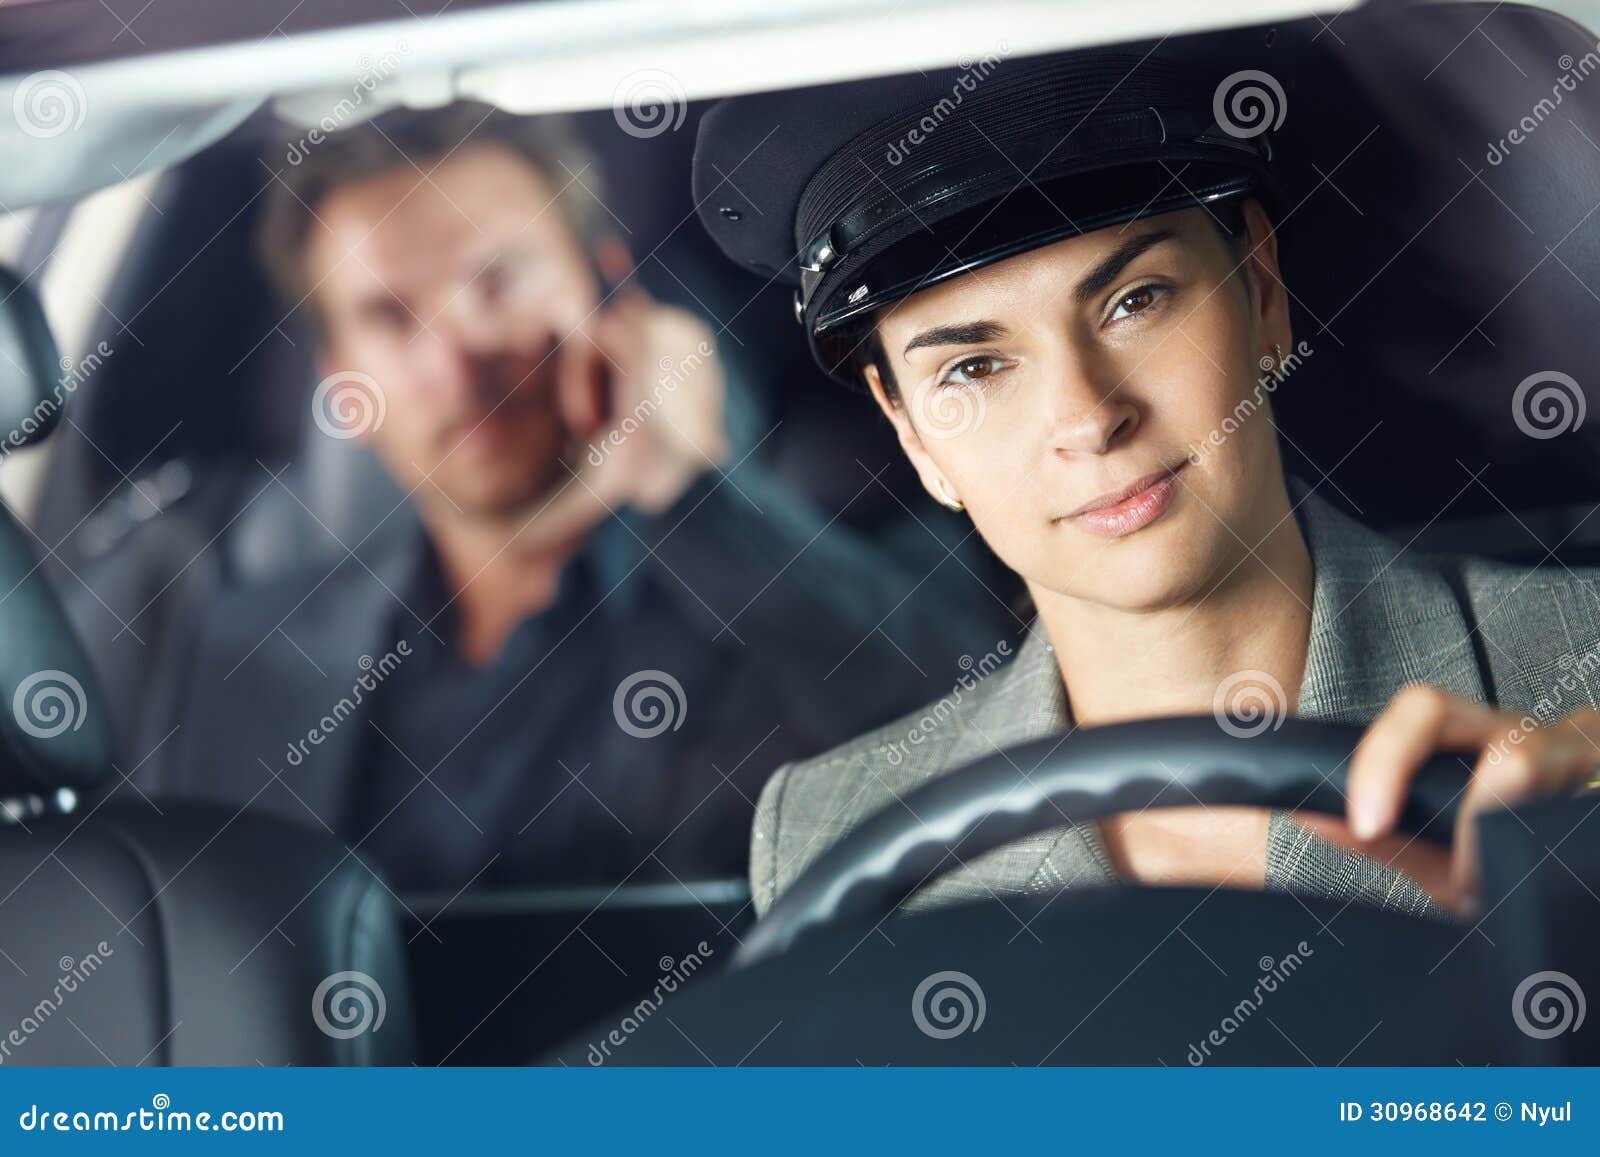 portrait of female chauffeur